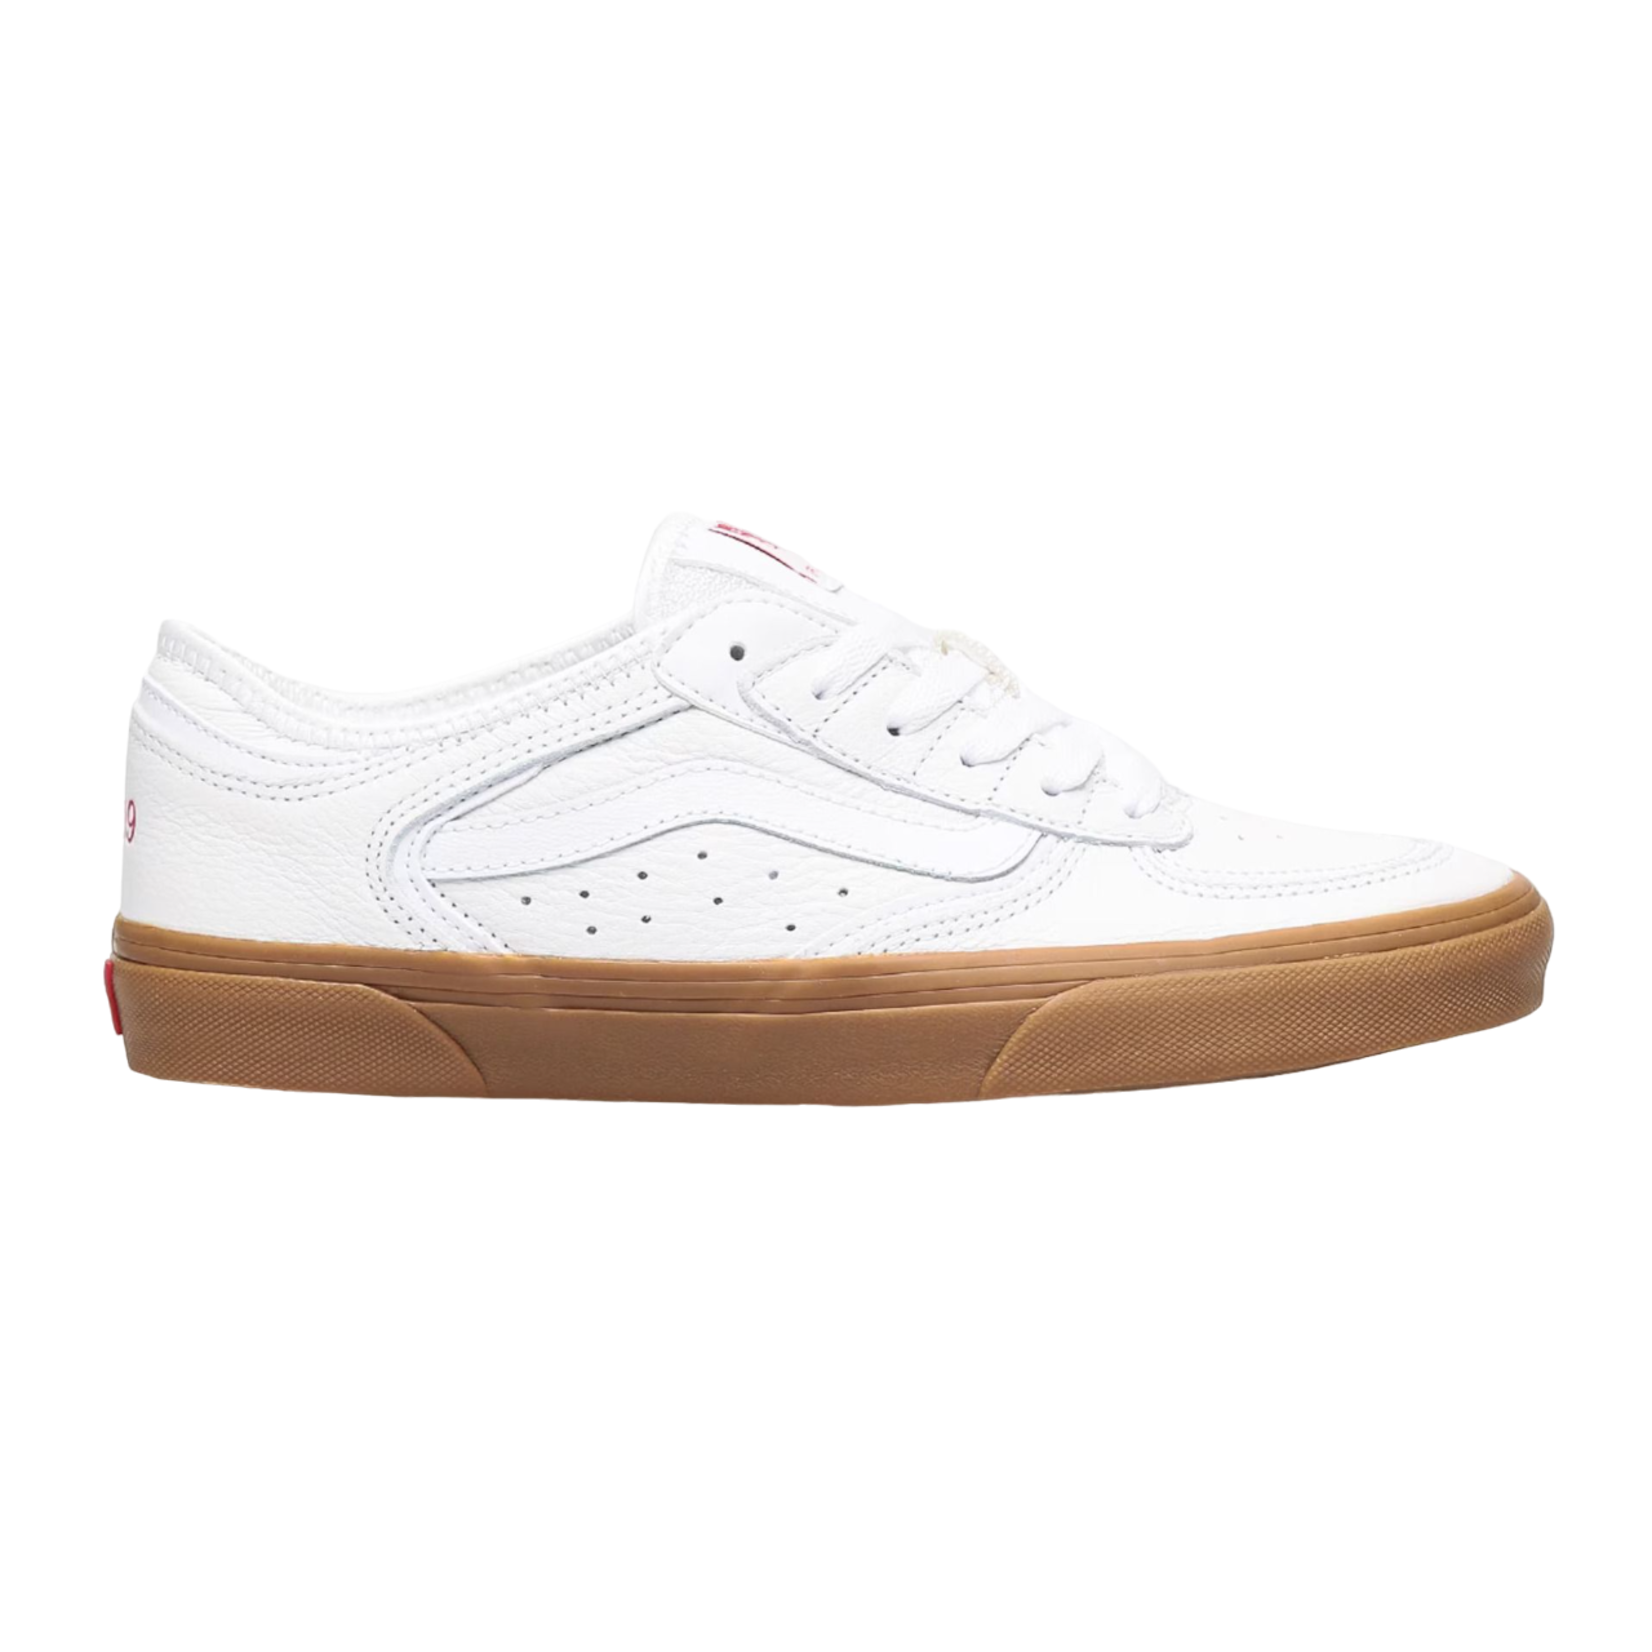 Vans Vans Rowley Pro Skate Shoe - White/Gum